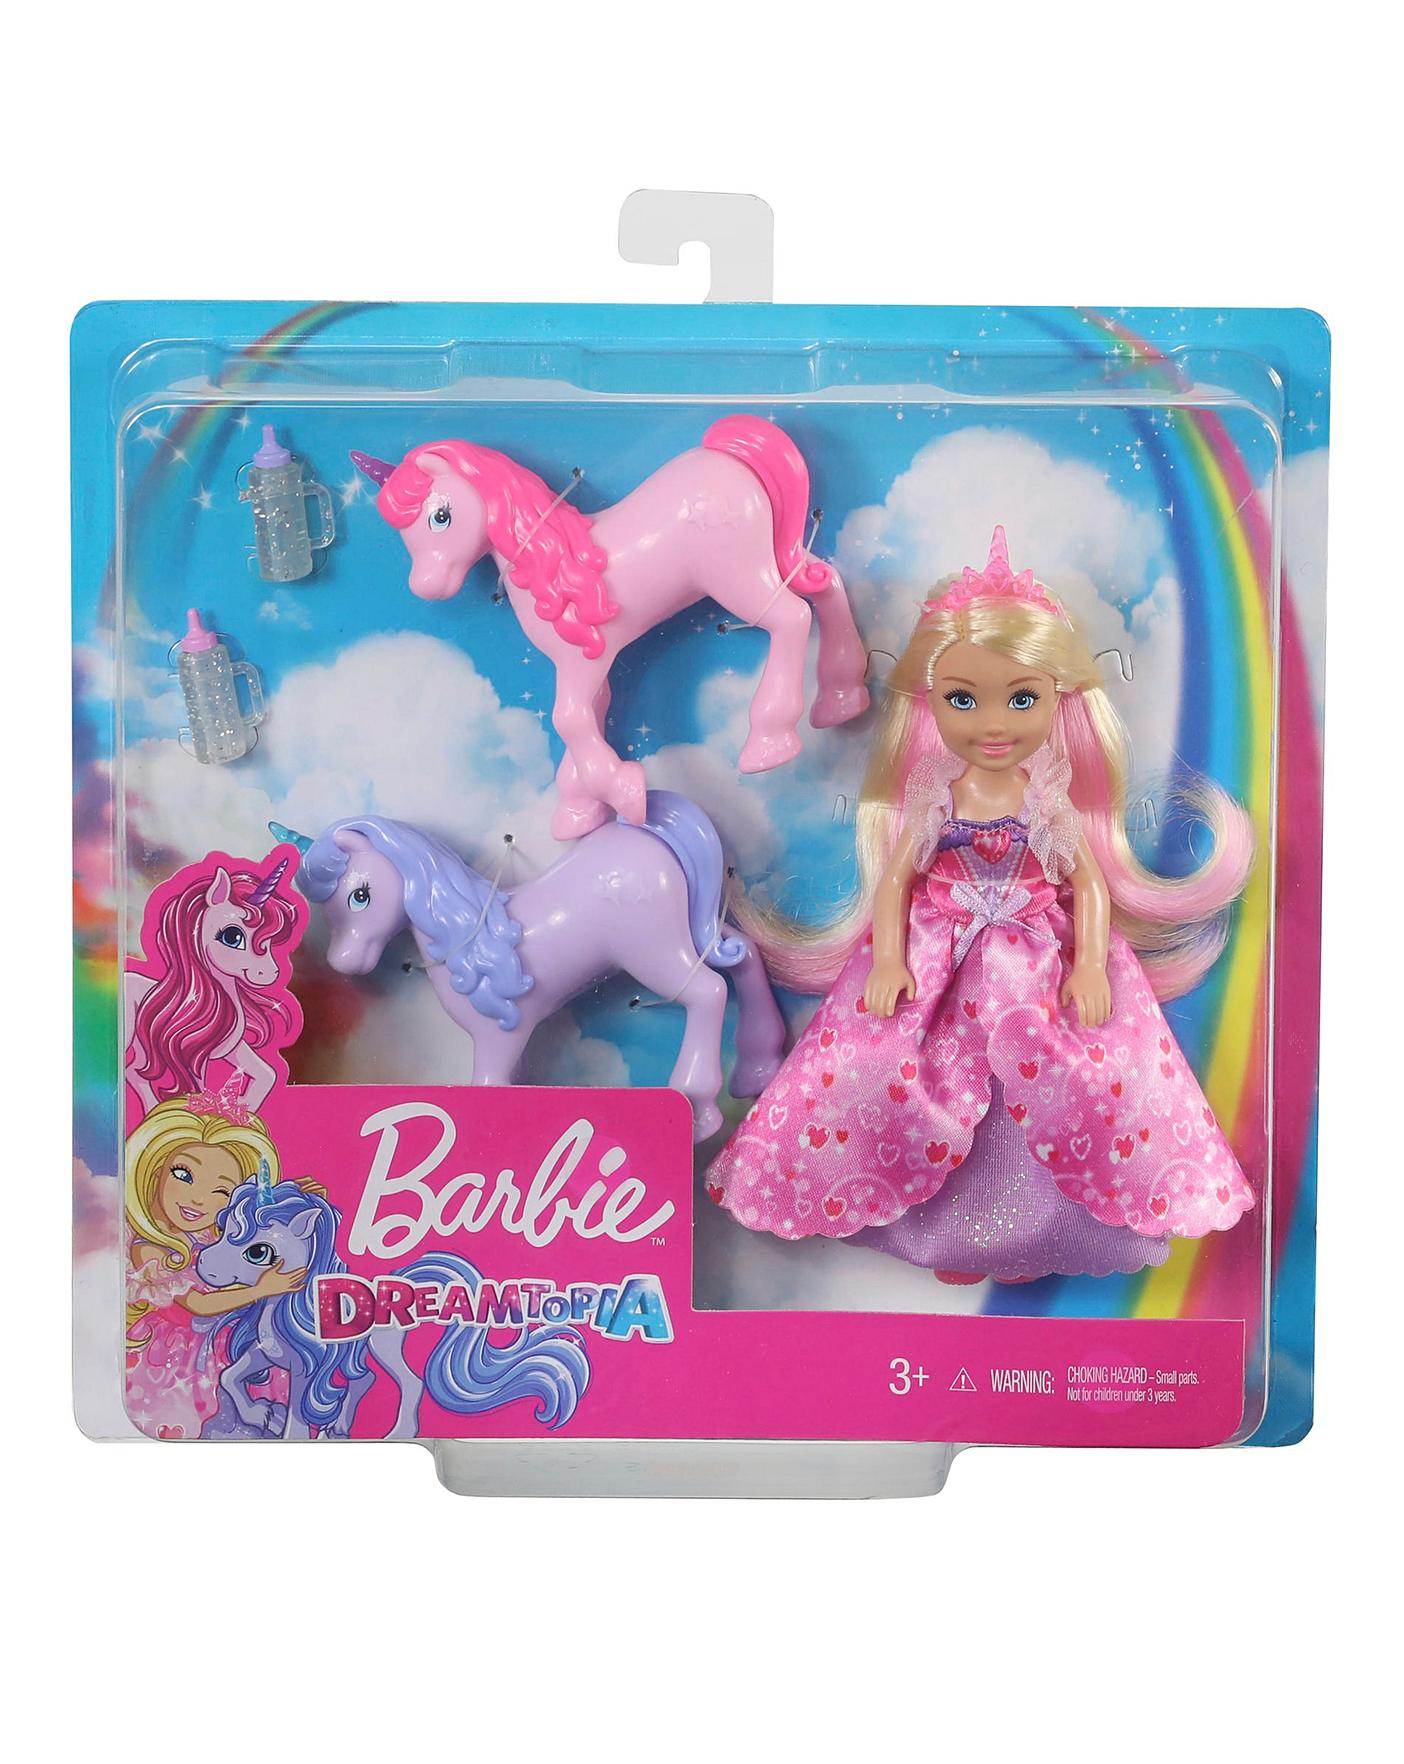 barbie unicorn